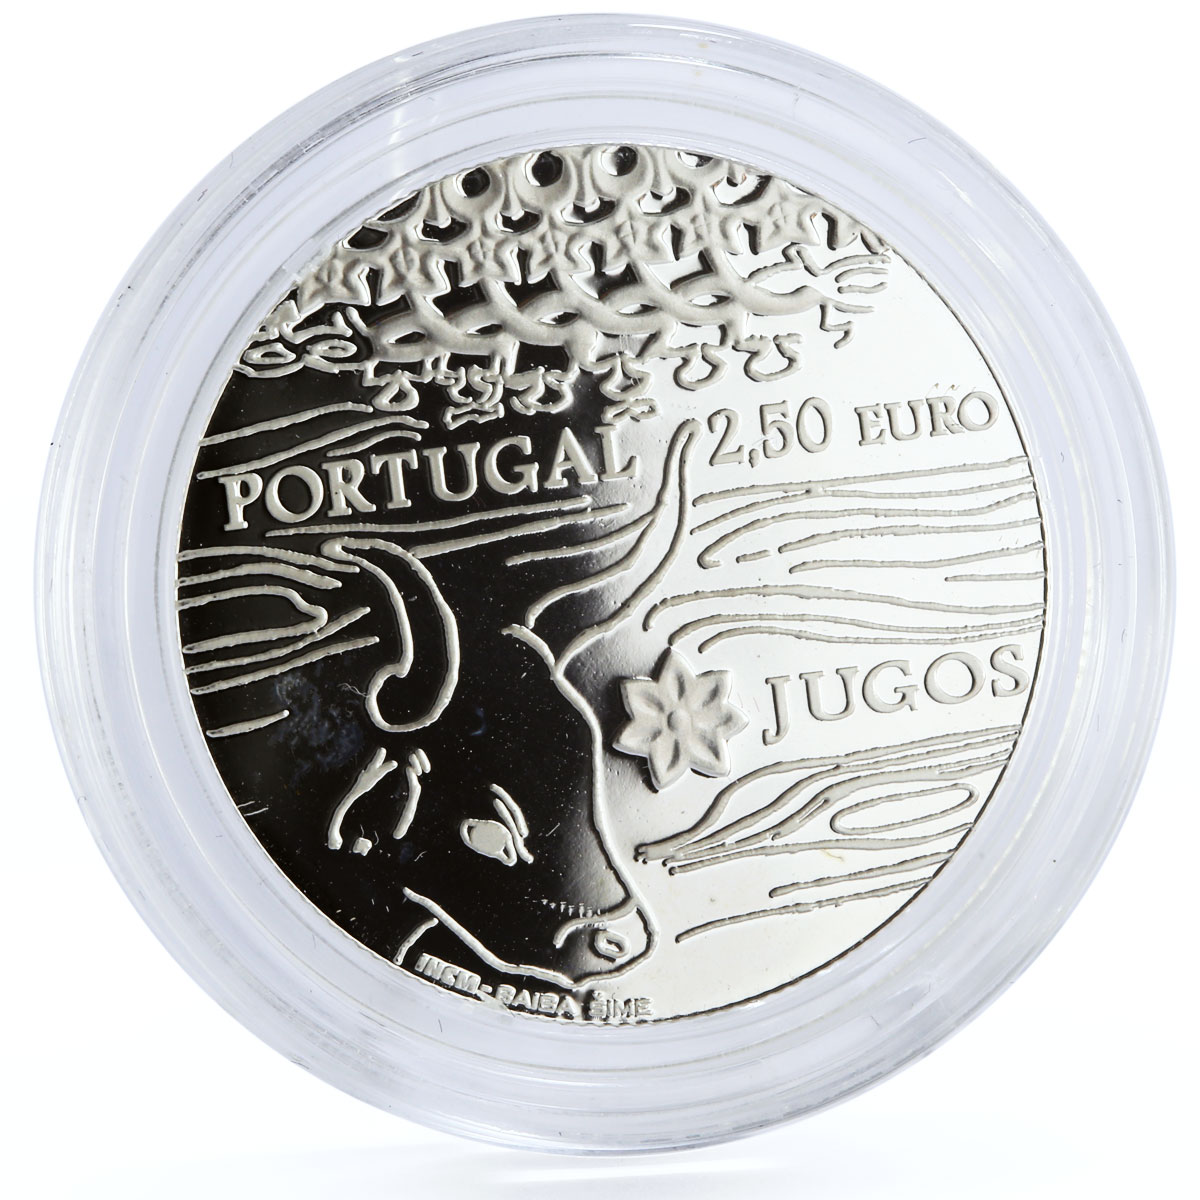 Portugal 2/5 euro Ethnographic Treasures Jugos The Yokes Bull silver coin 2014